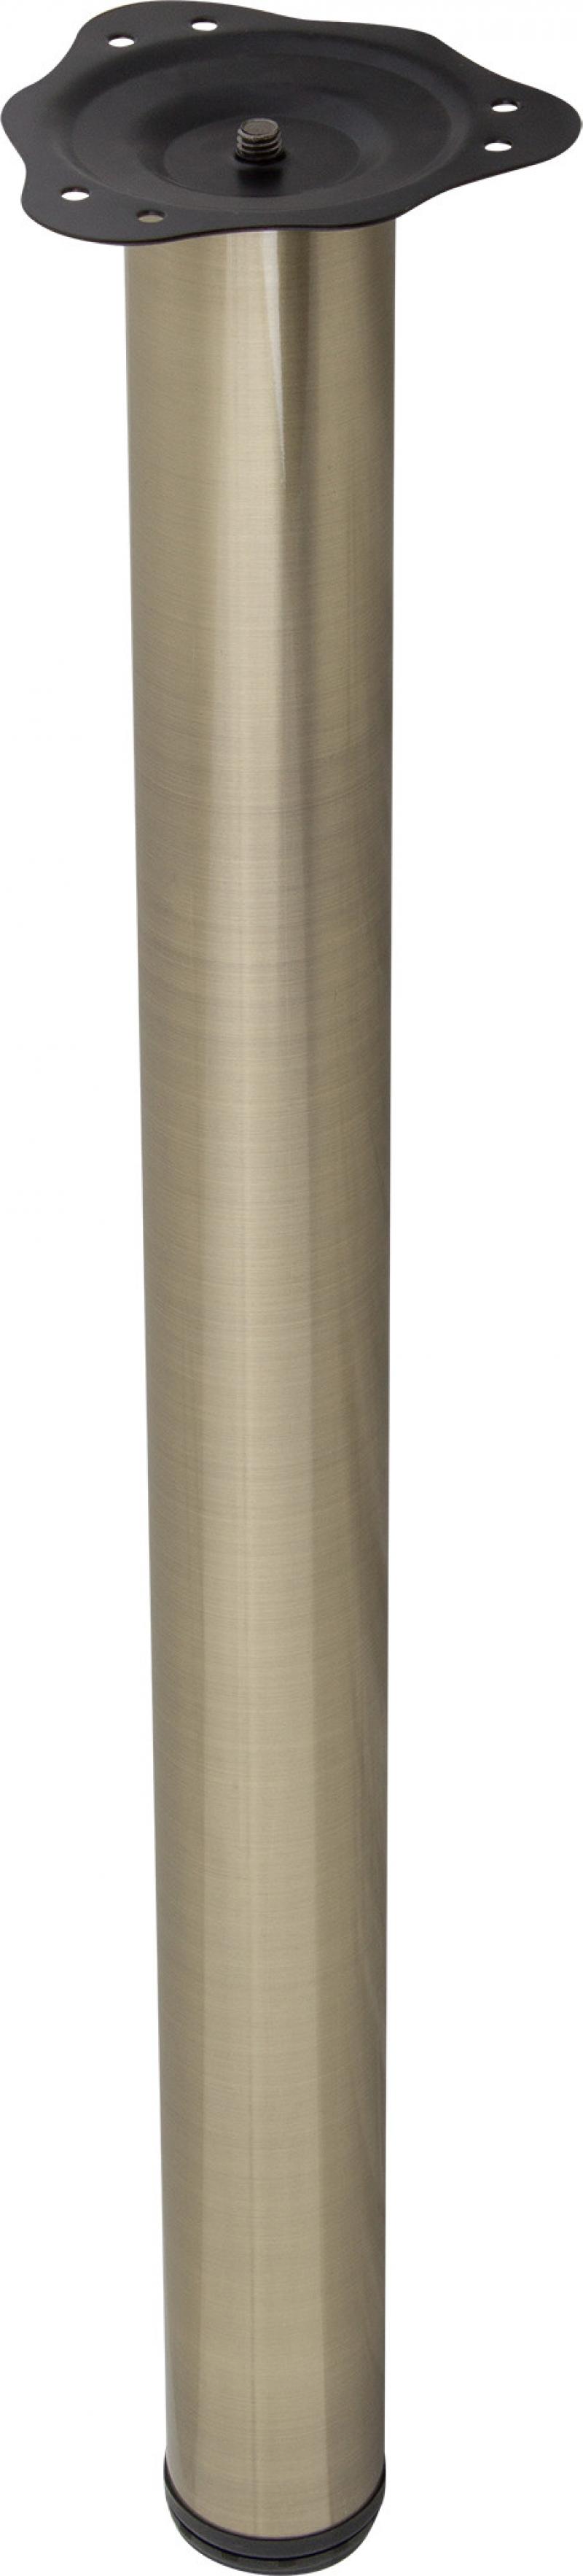 Ножка мебельная TL-009 710 мм сталь максимальная нагрузка 50 кг цвет бронза